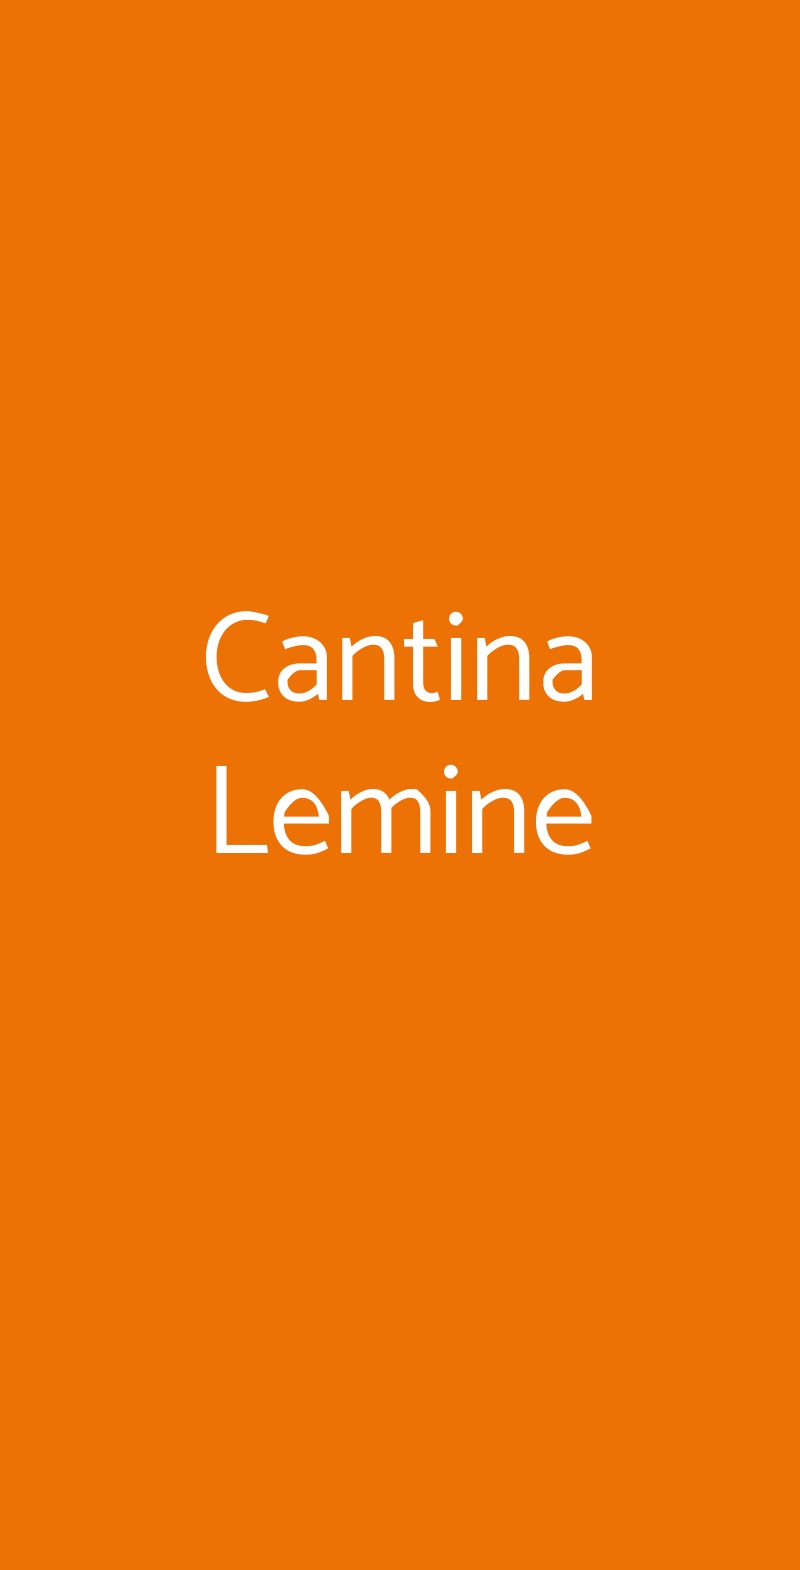 Cantina Lemine Almenno San Salvatore menù 1 pagina